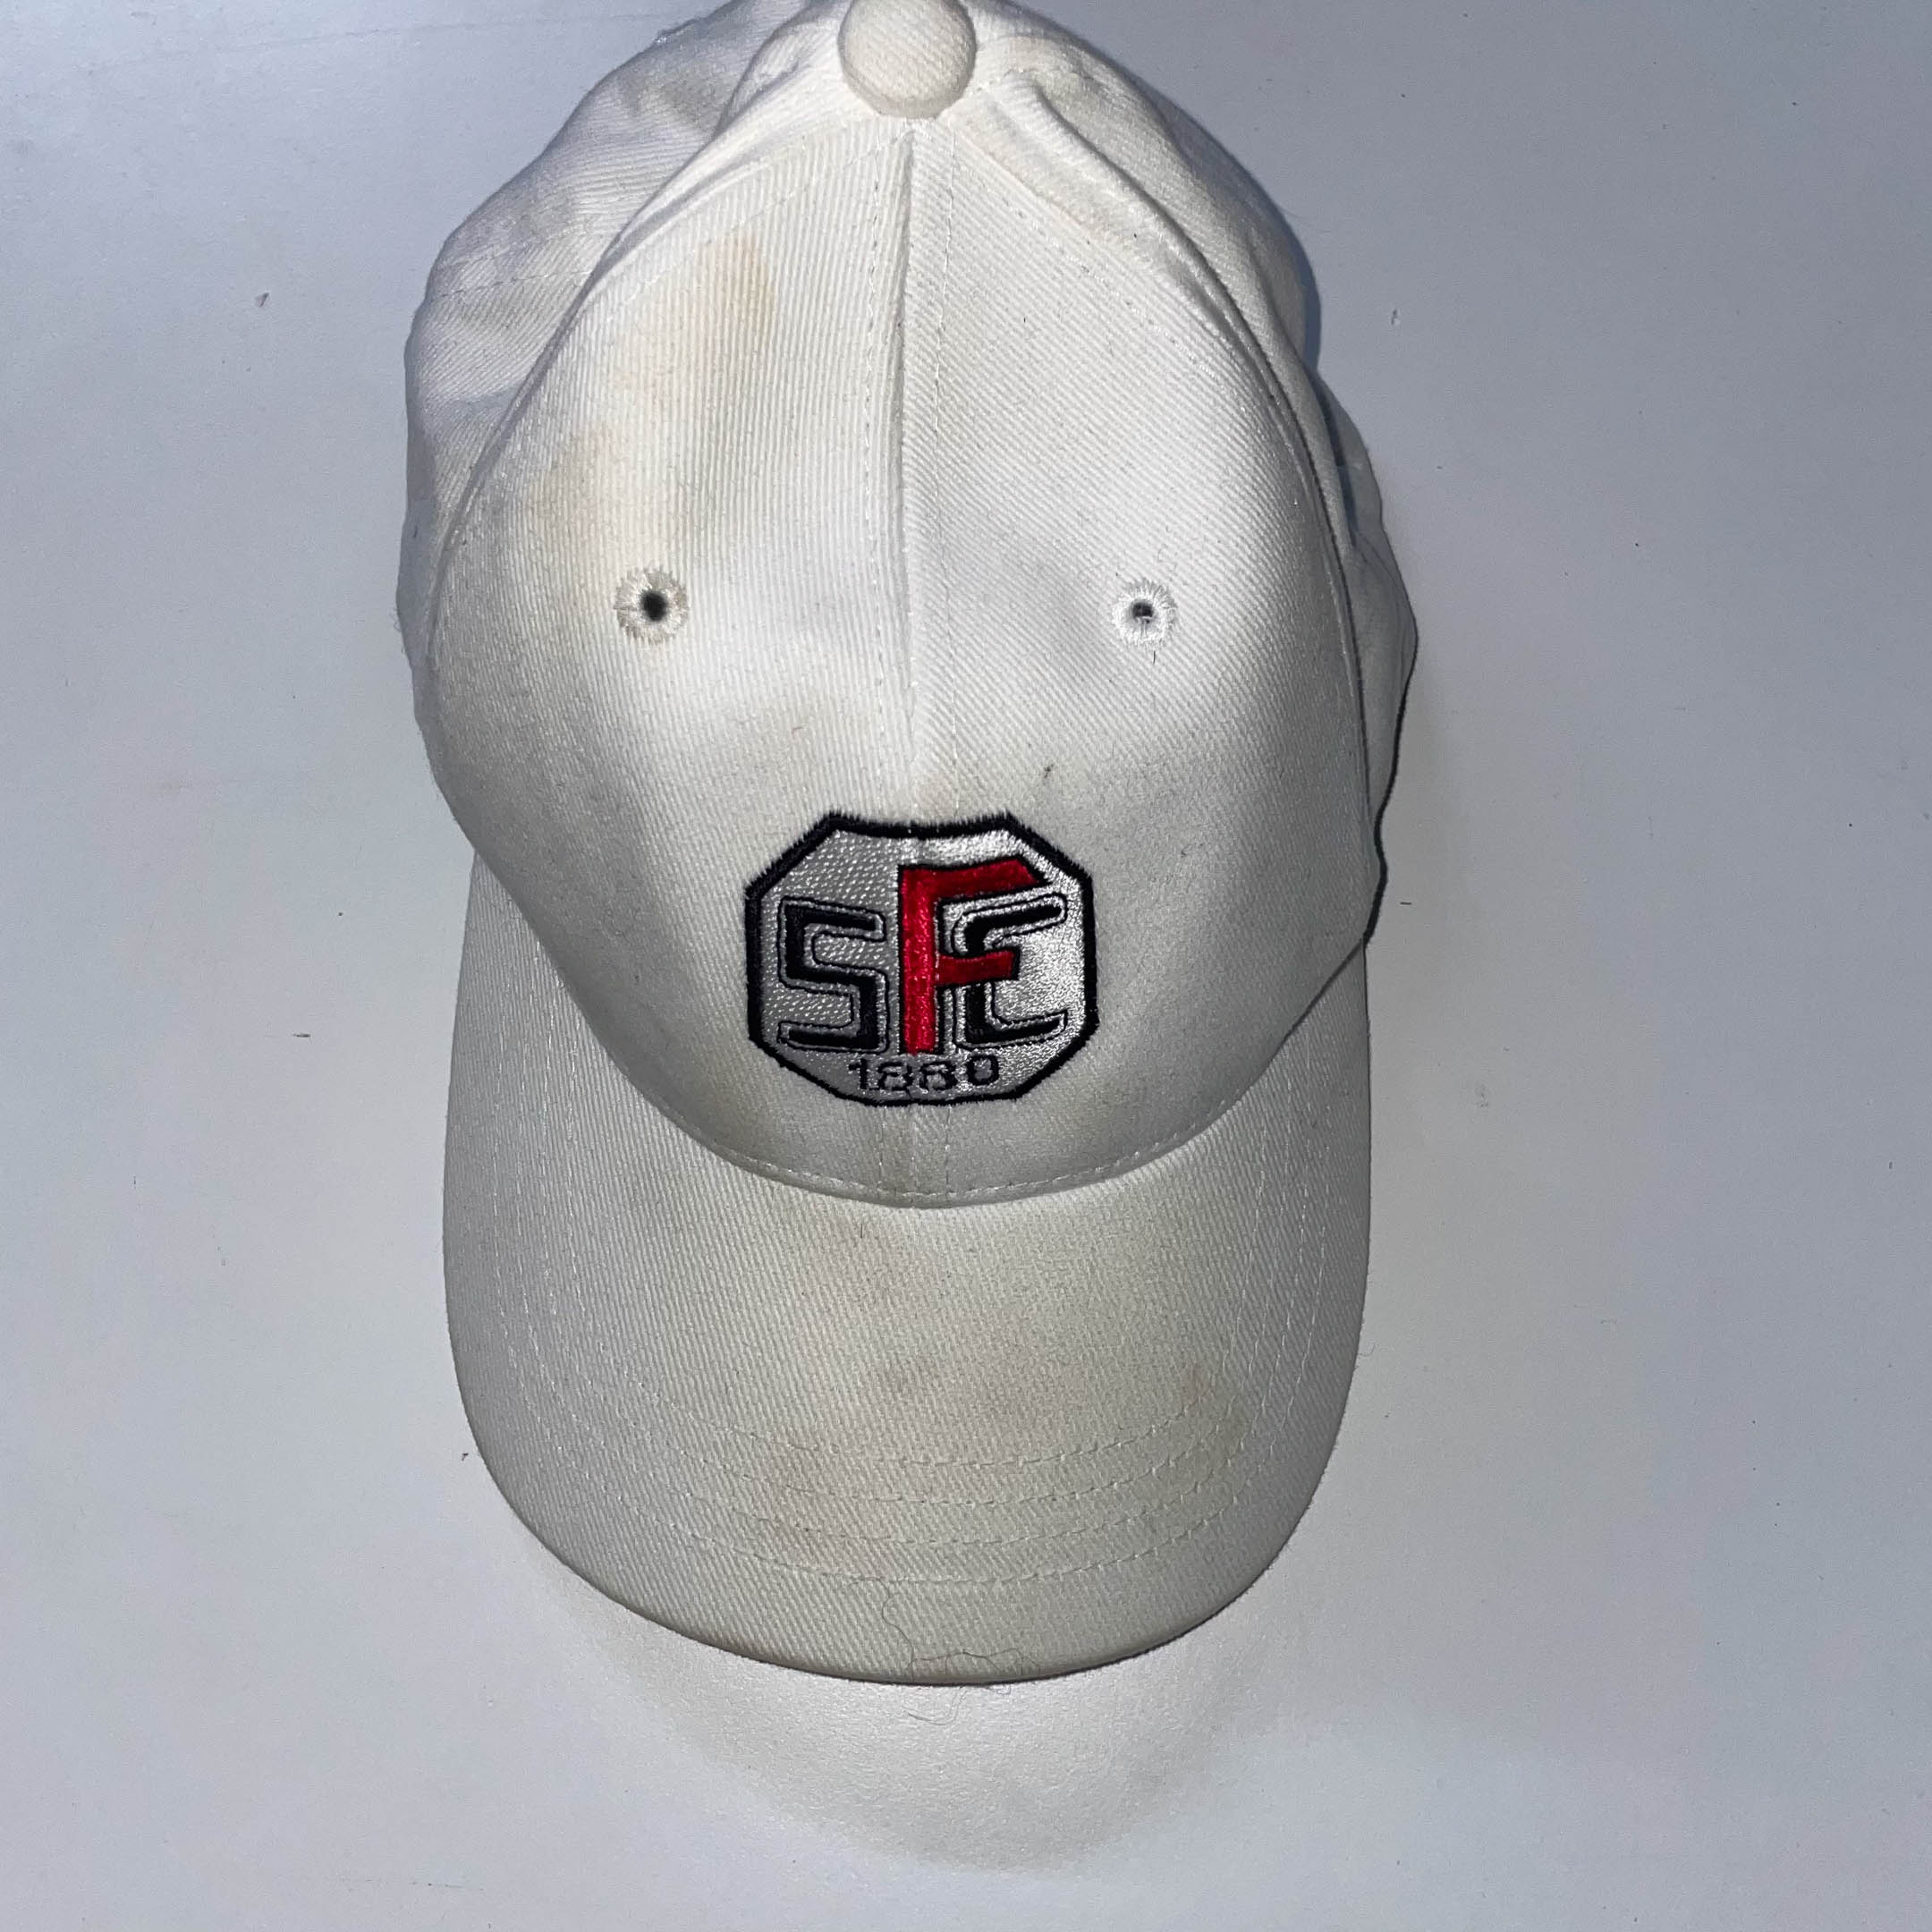 Vintage Stickfabrik.com big logo white baseball cap